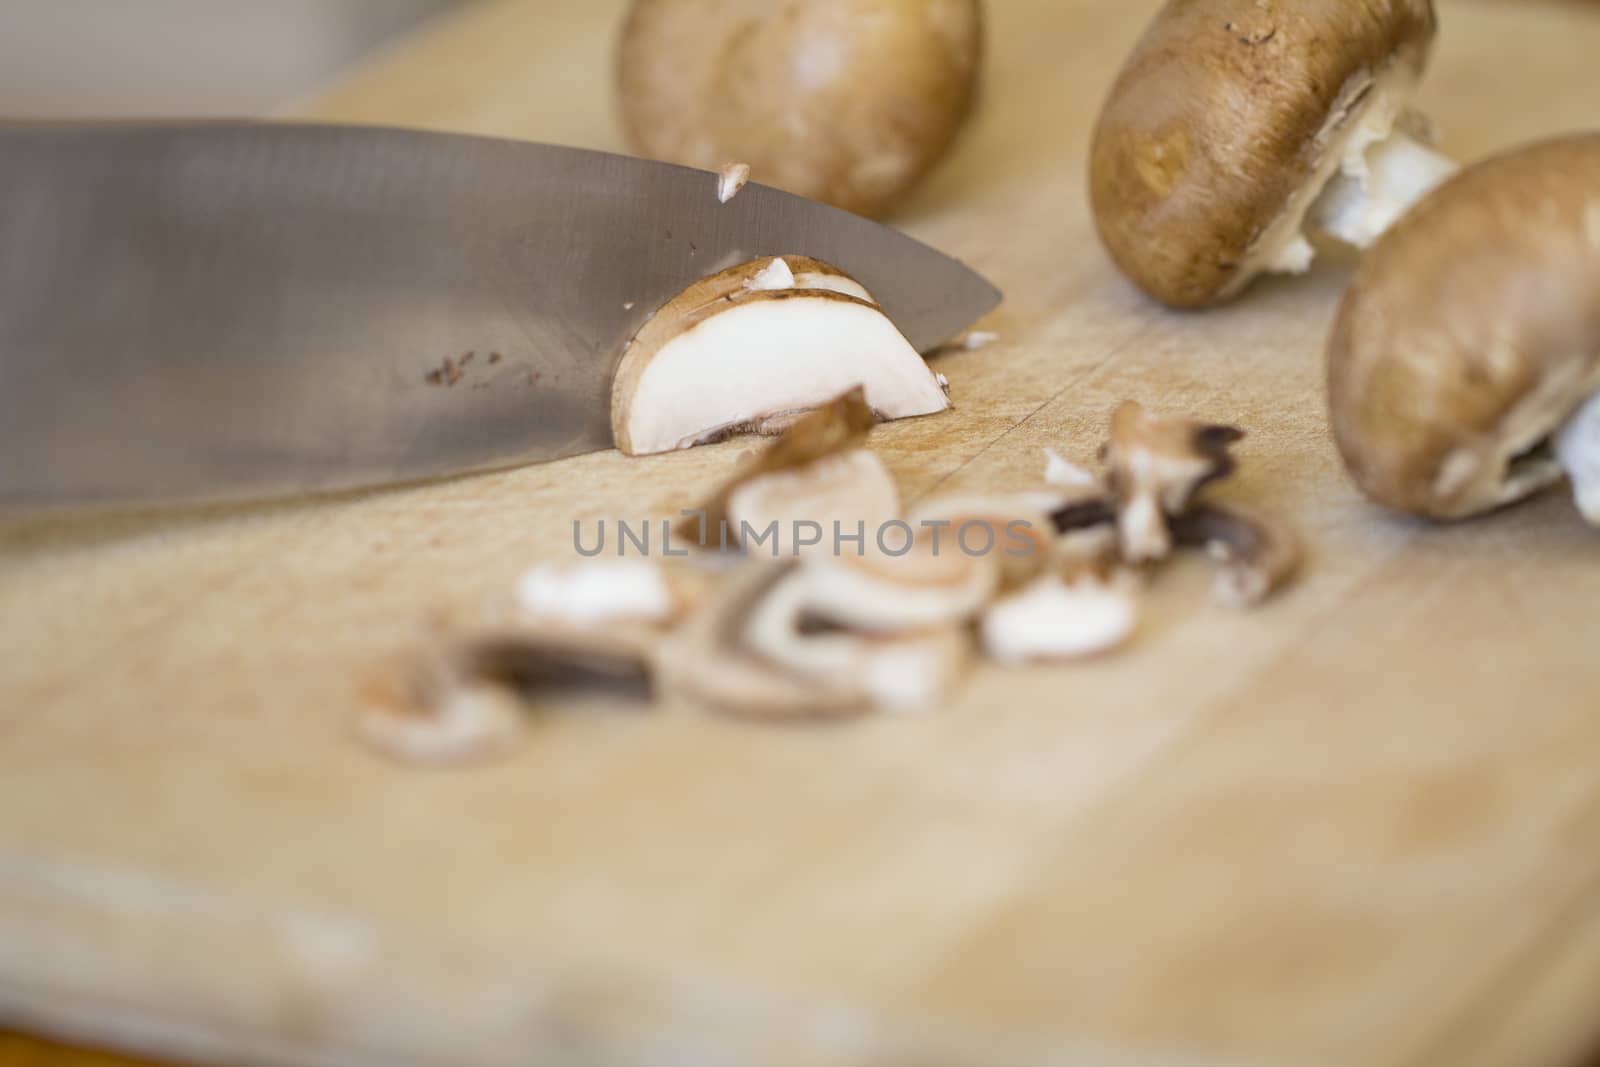 Chopping Cremini mushrooms, agaricus risporus on a wooden chopping board